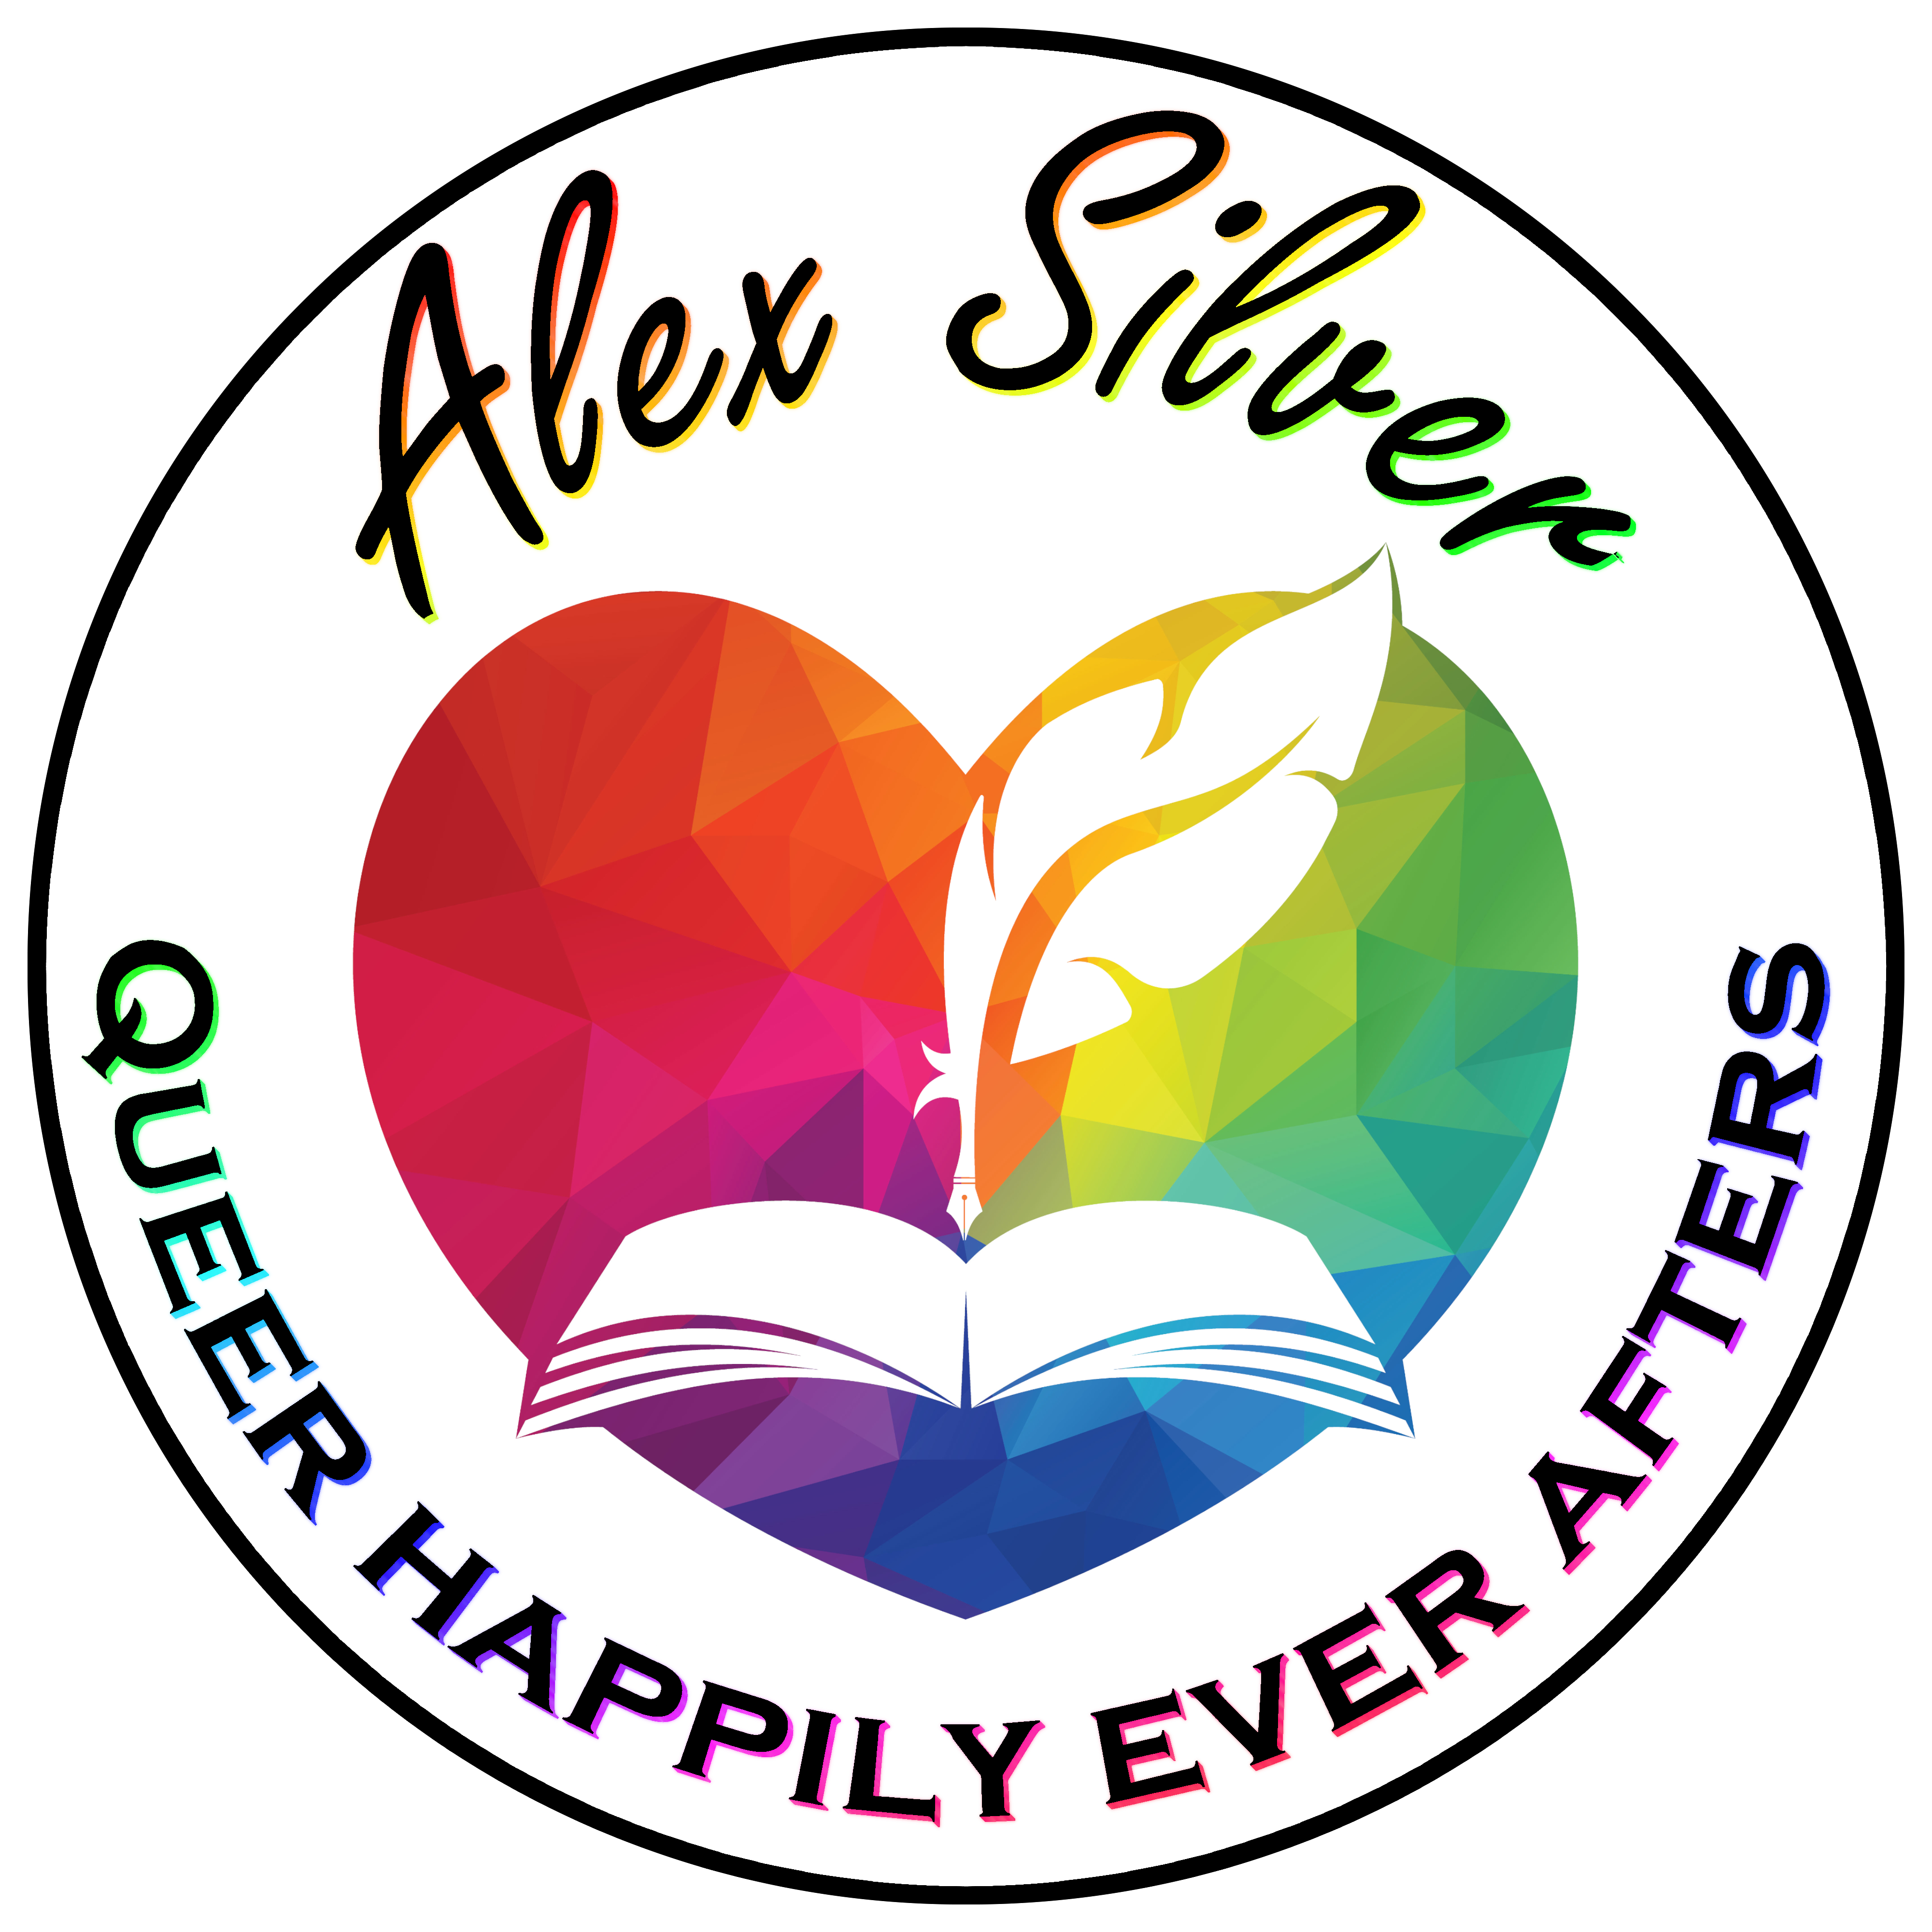 Alex Silver Writes